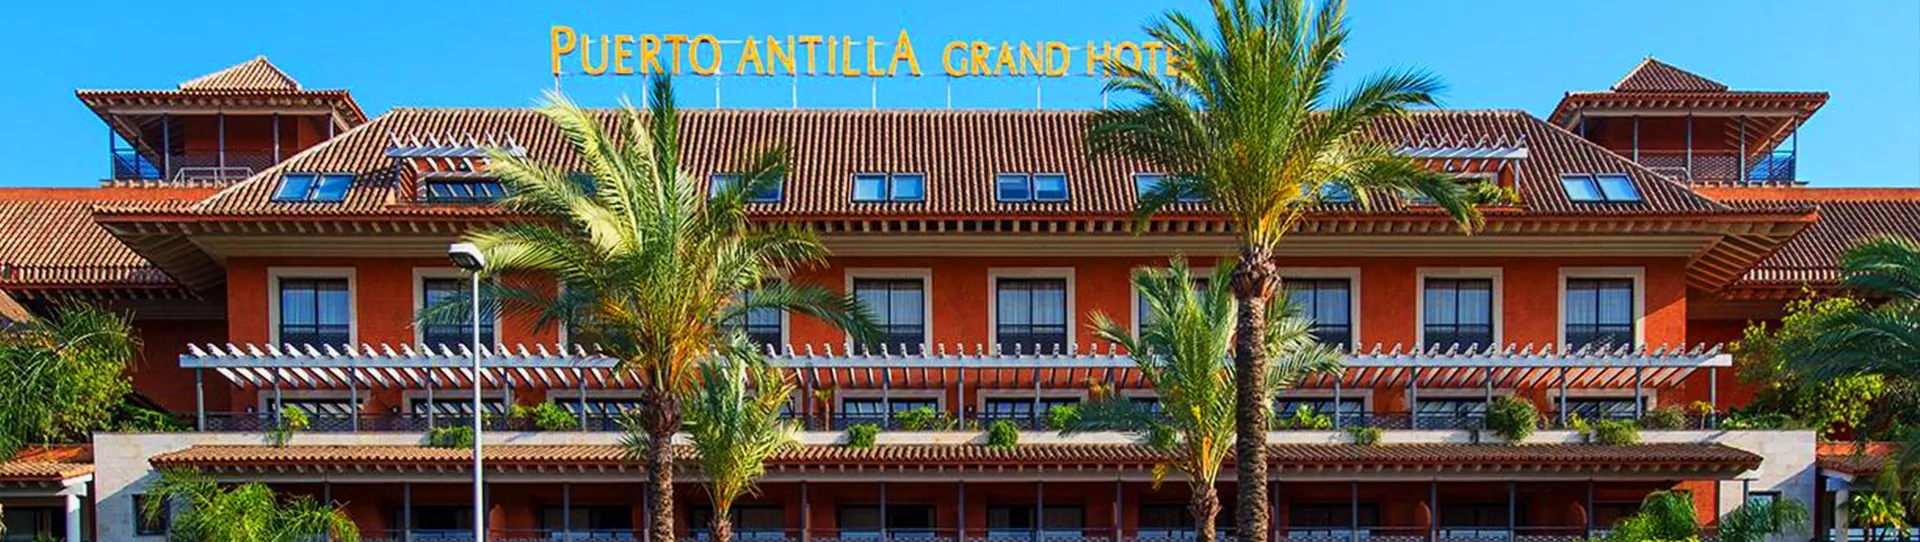 Spain golf holidays - Puerto Antilla Grand Hotel  - Photo 1